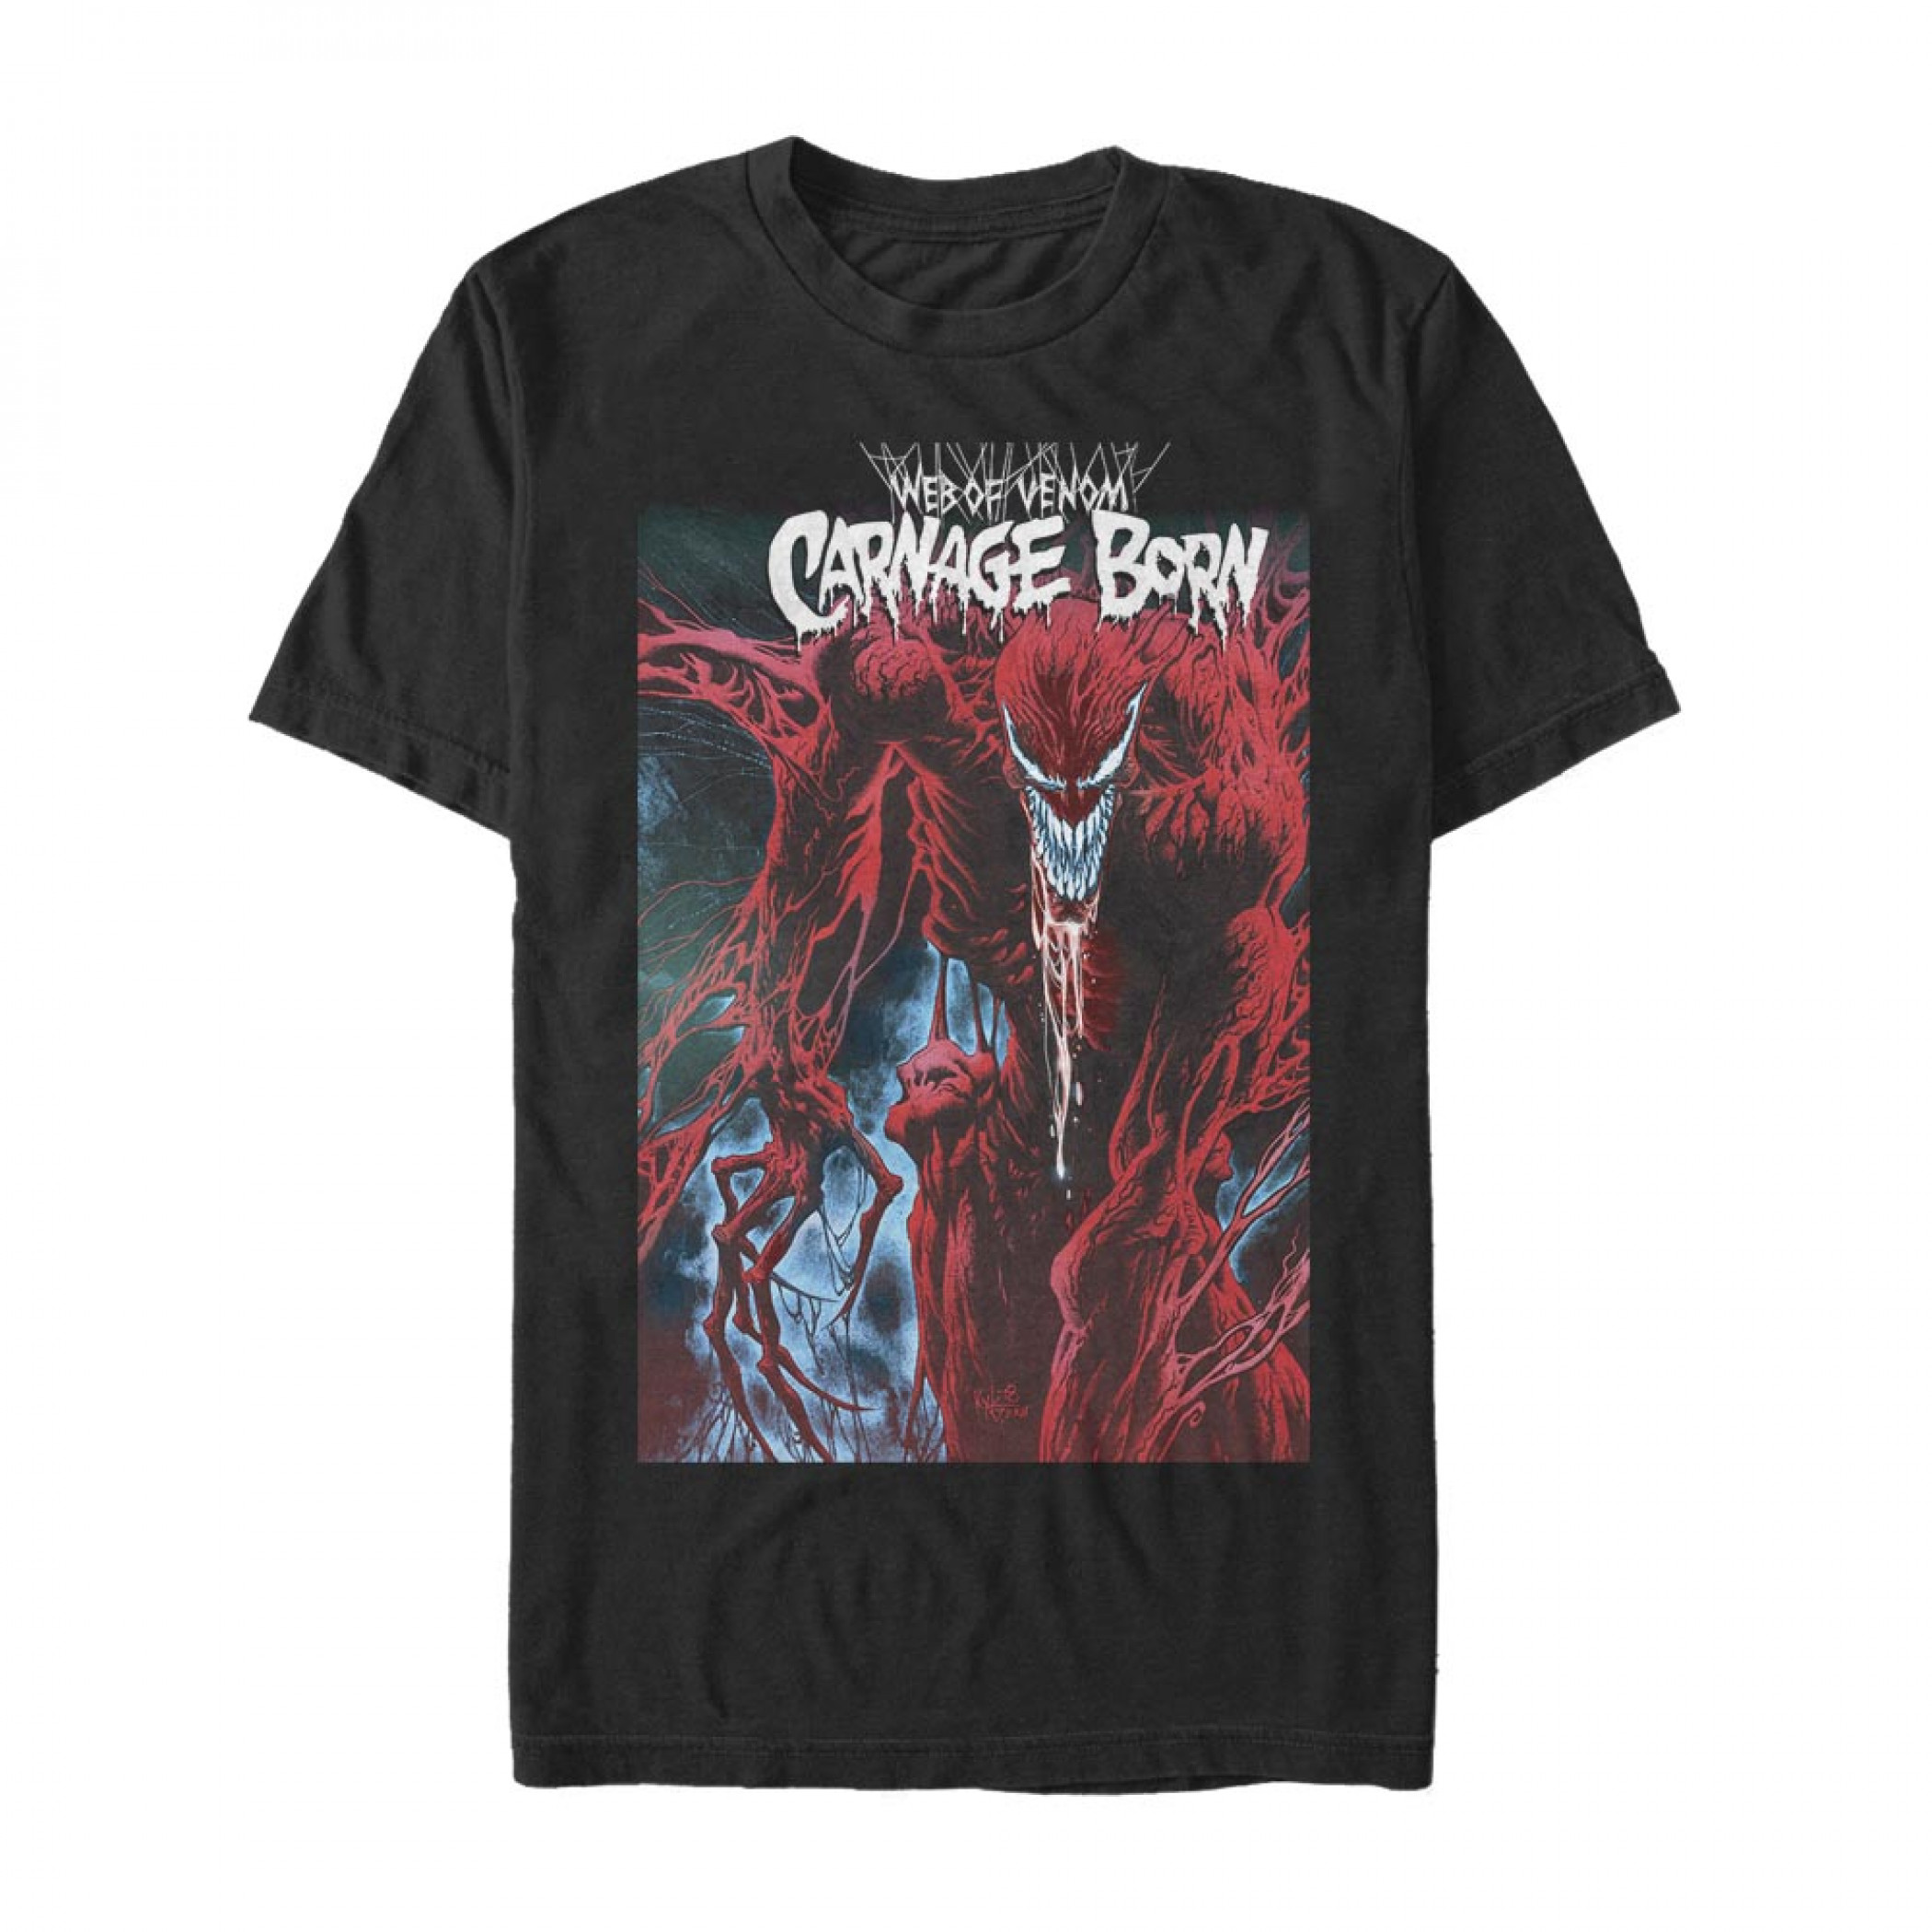 Carnage Web of Venom T-Shirt